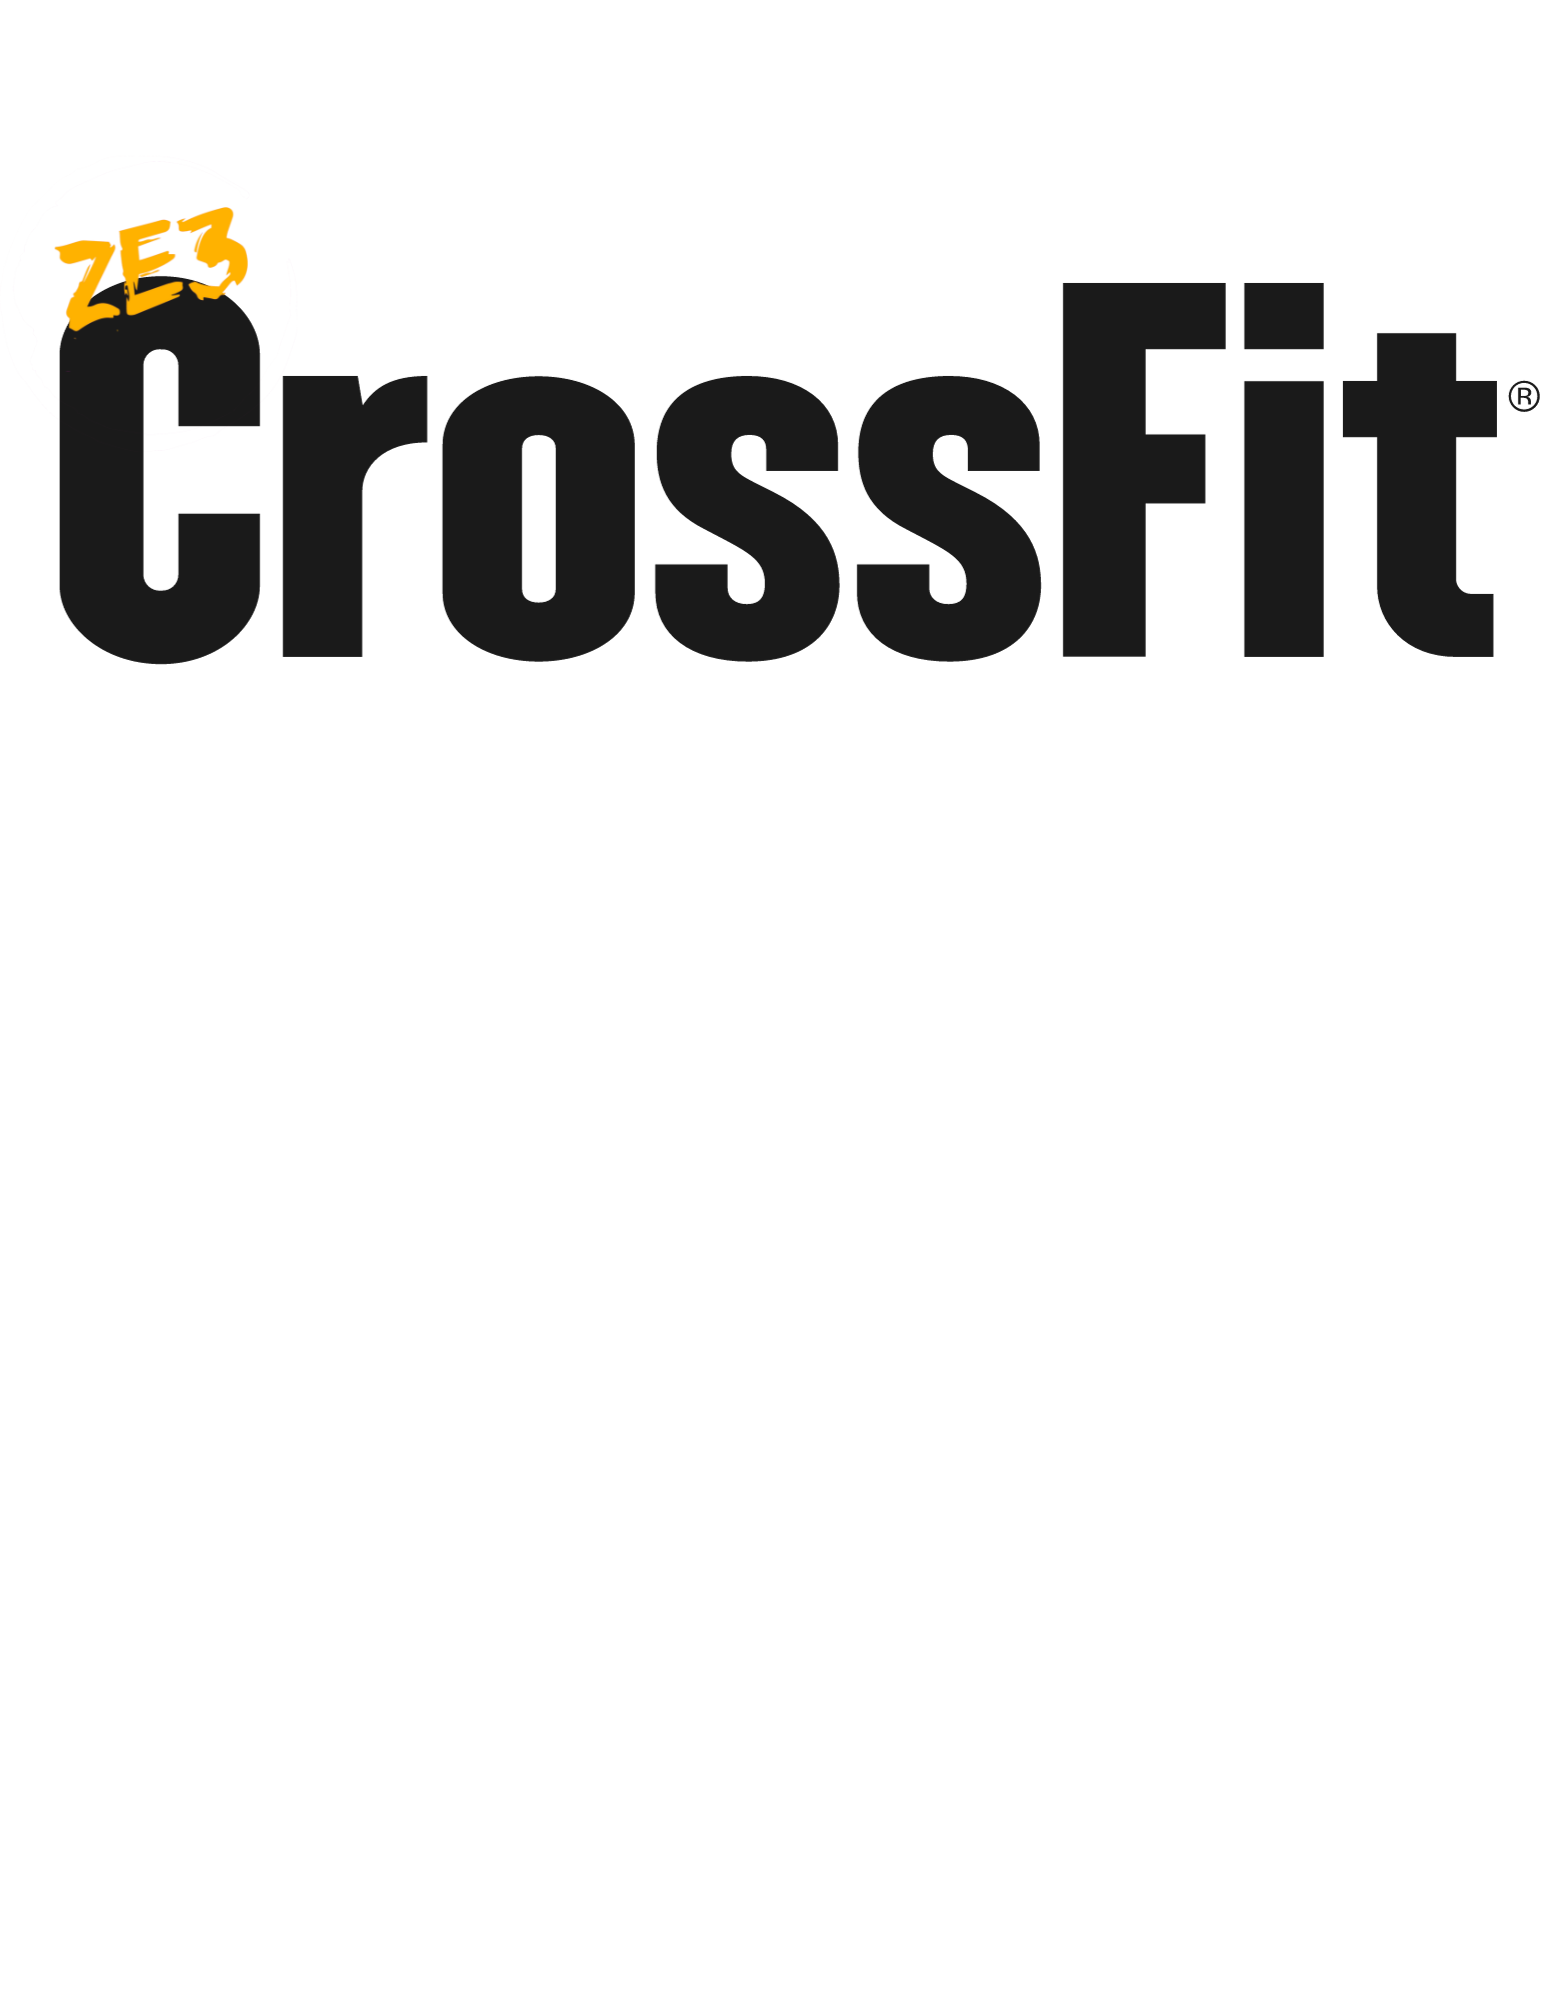 ZE3 CrossFit in Backnang